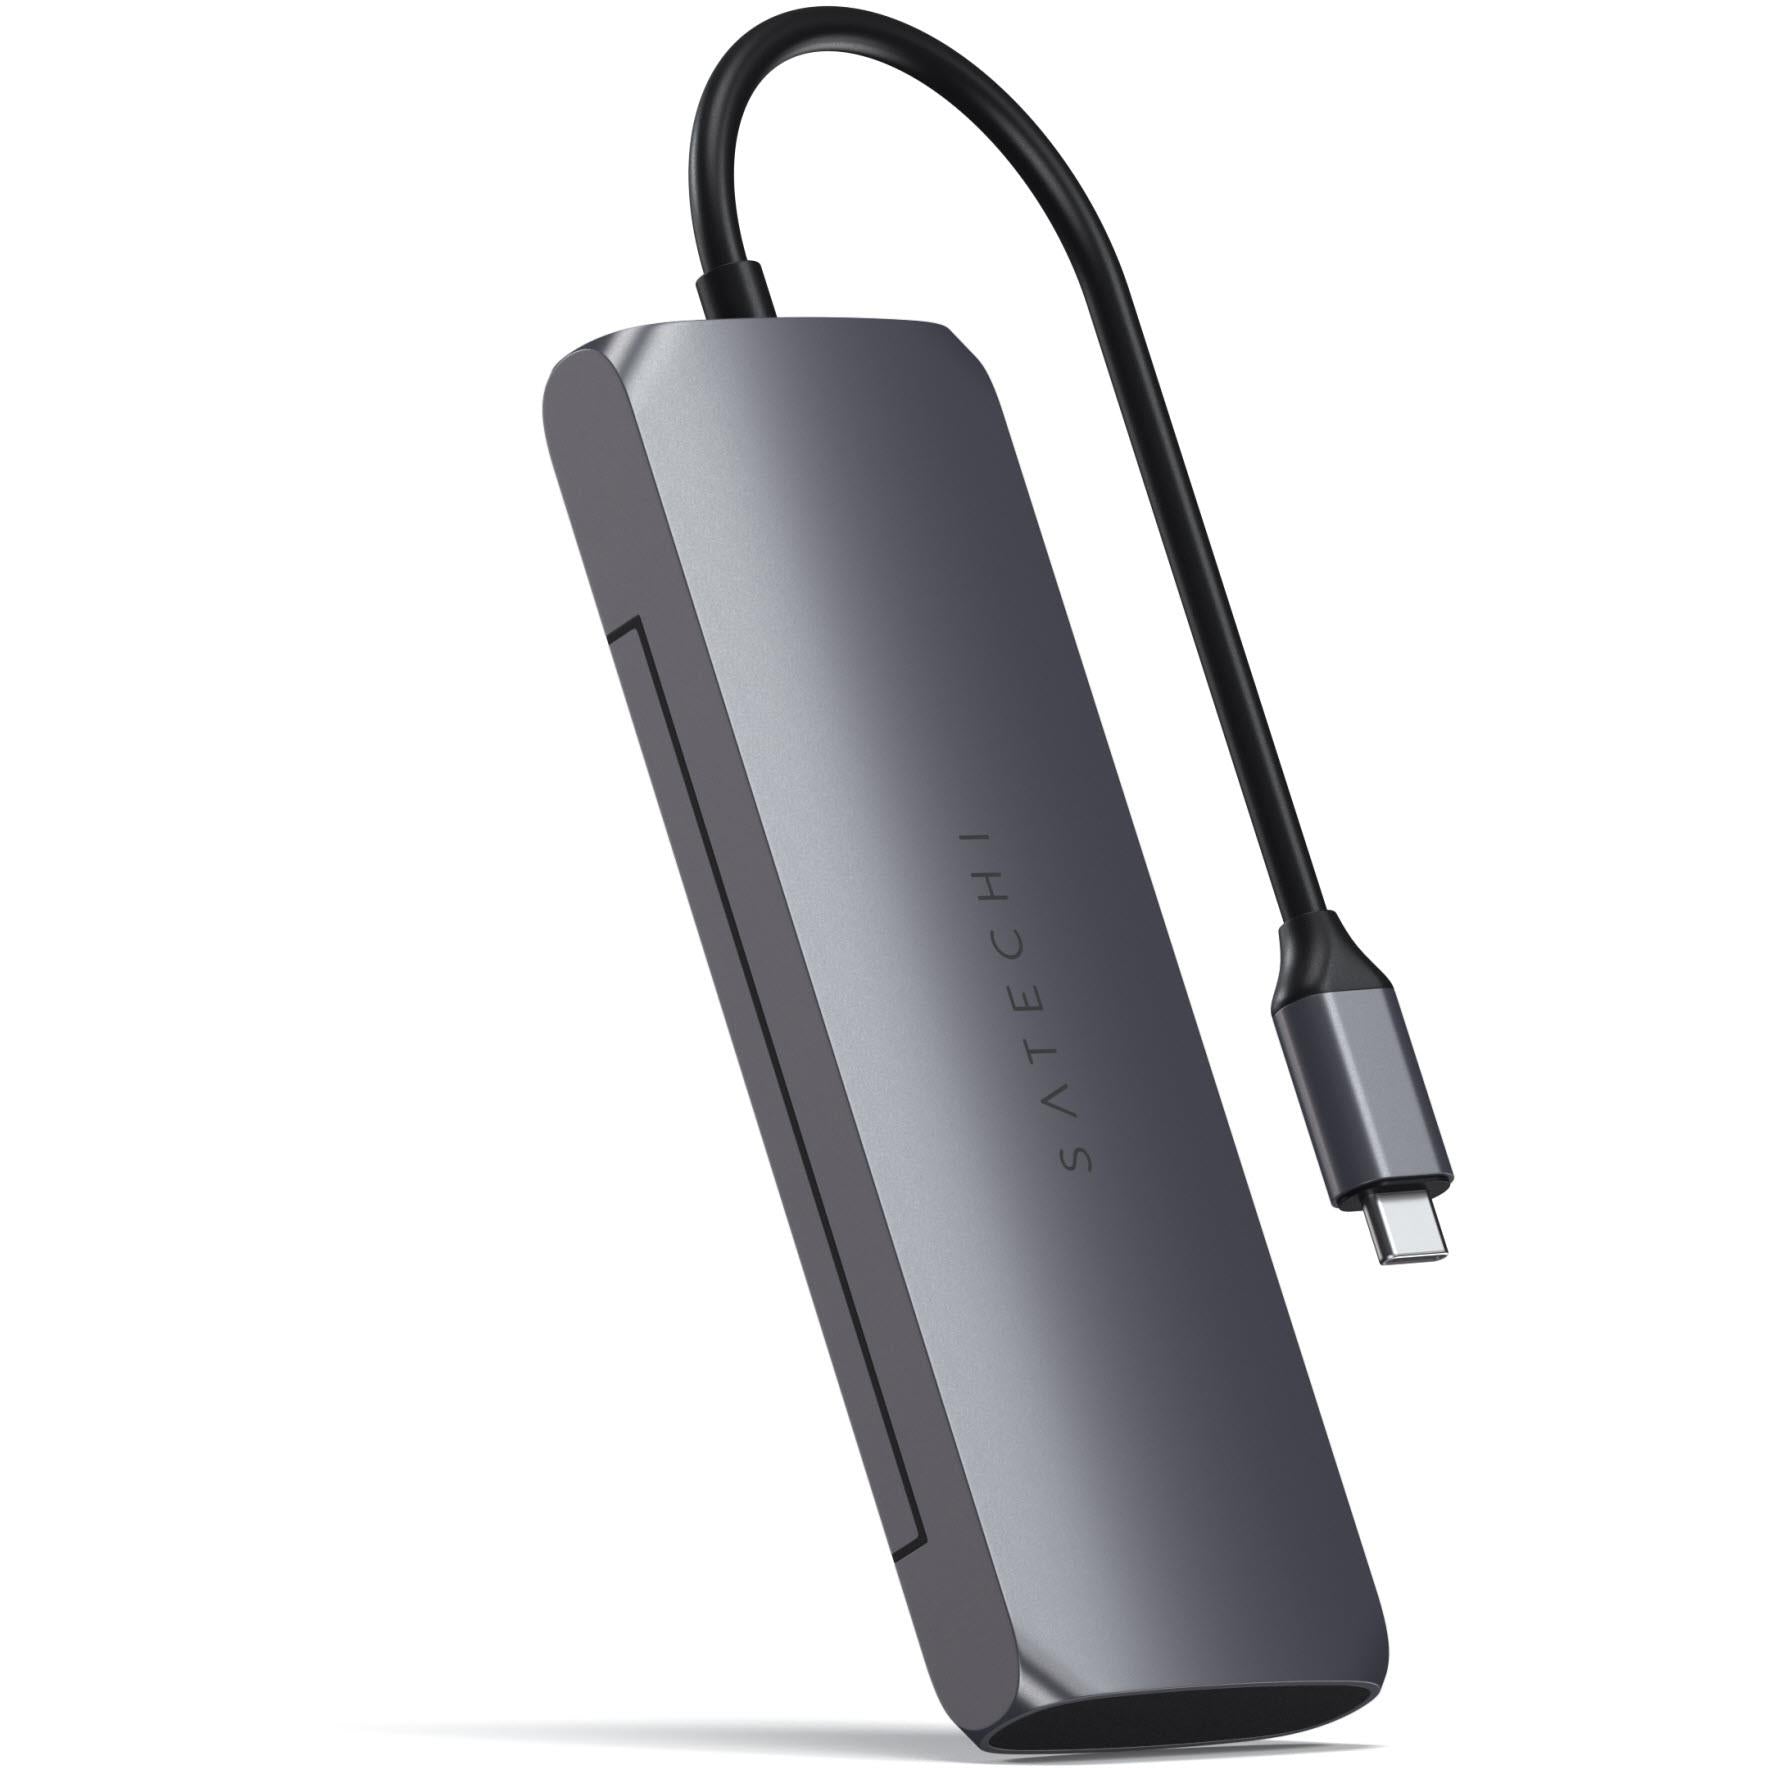 SATECHI Type-C Hub Stand with M.2 SATA SSD Enclosure - Fits Micro/SD Card  Readers, USB Ports, Headphone Jack - for Mac Mini, Mac Studio (Silver)